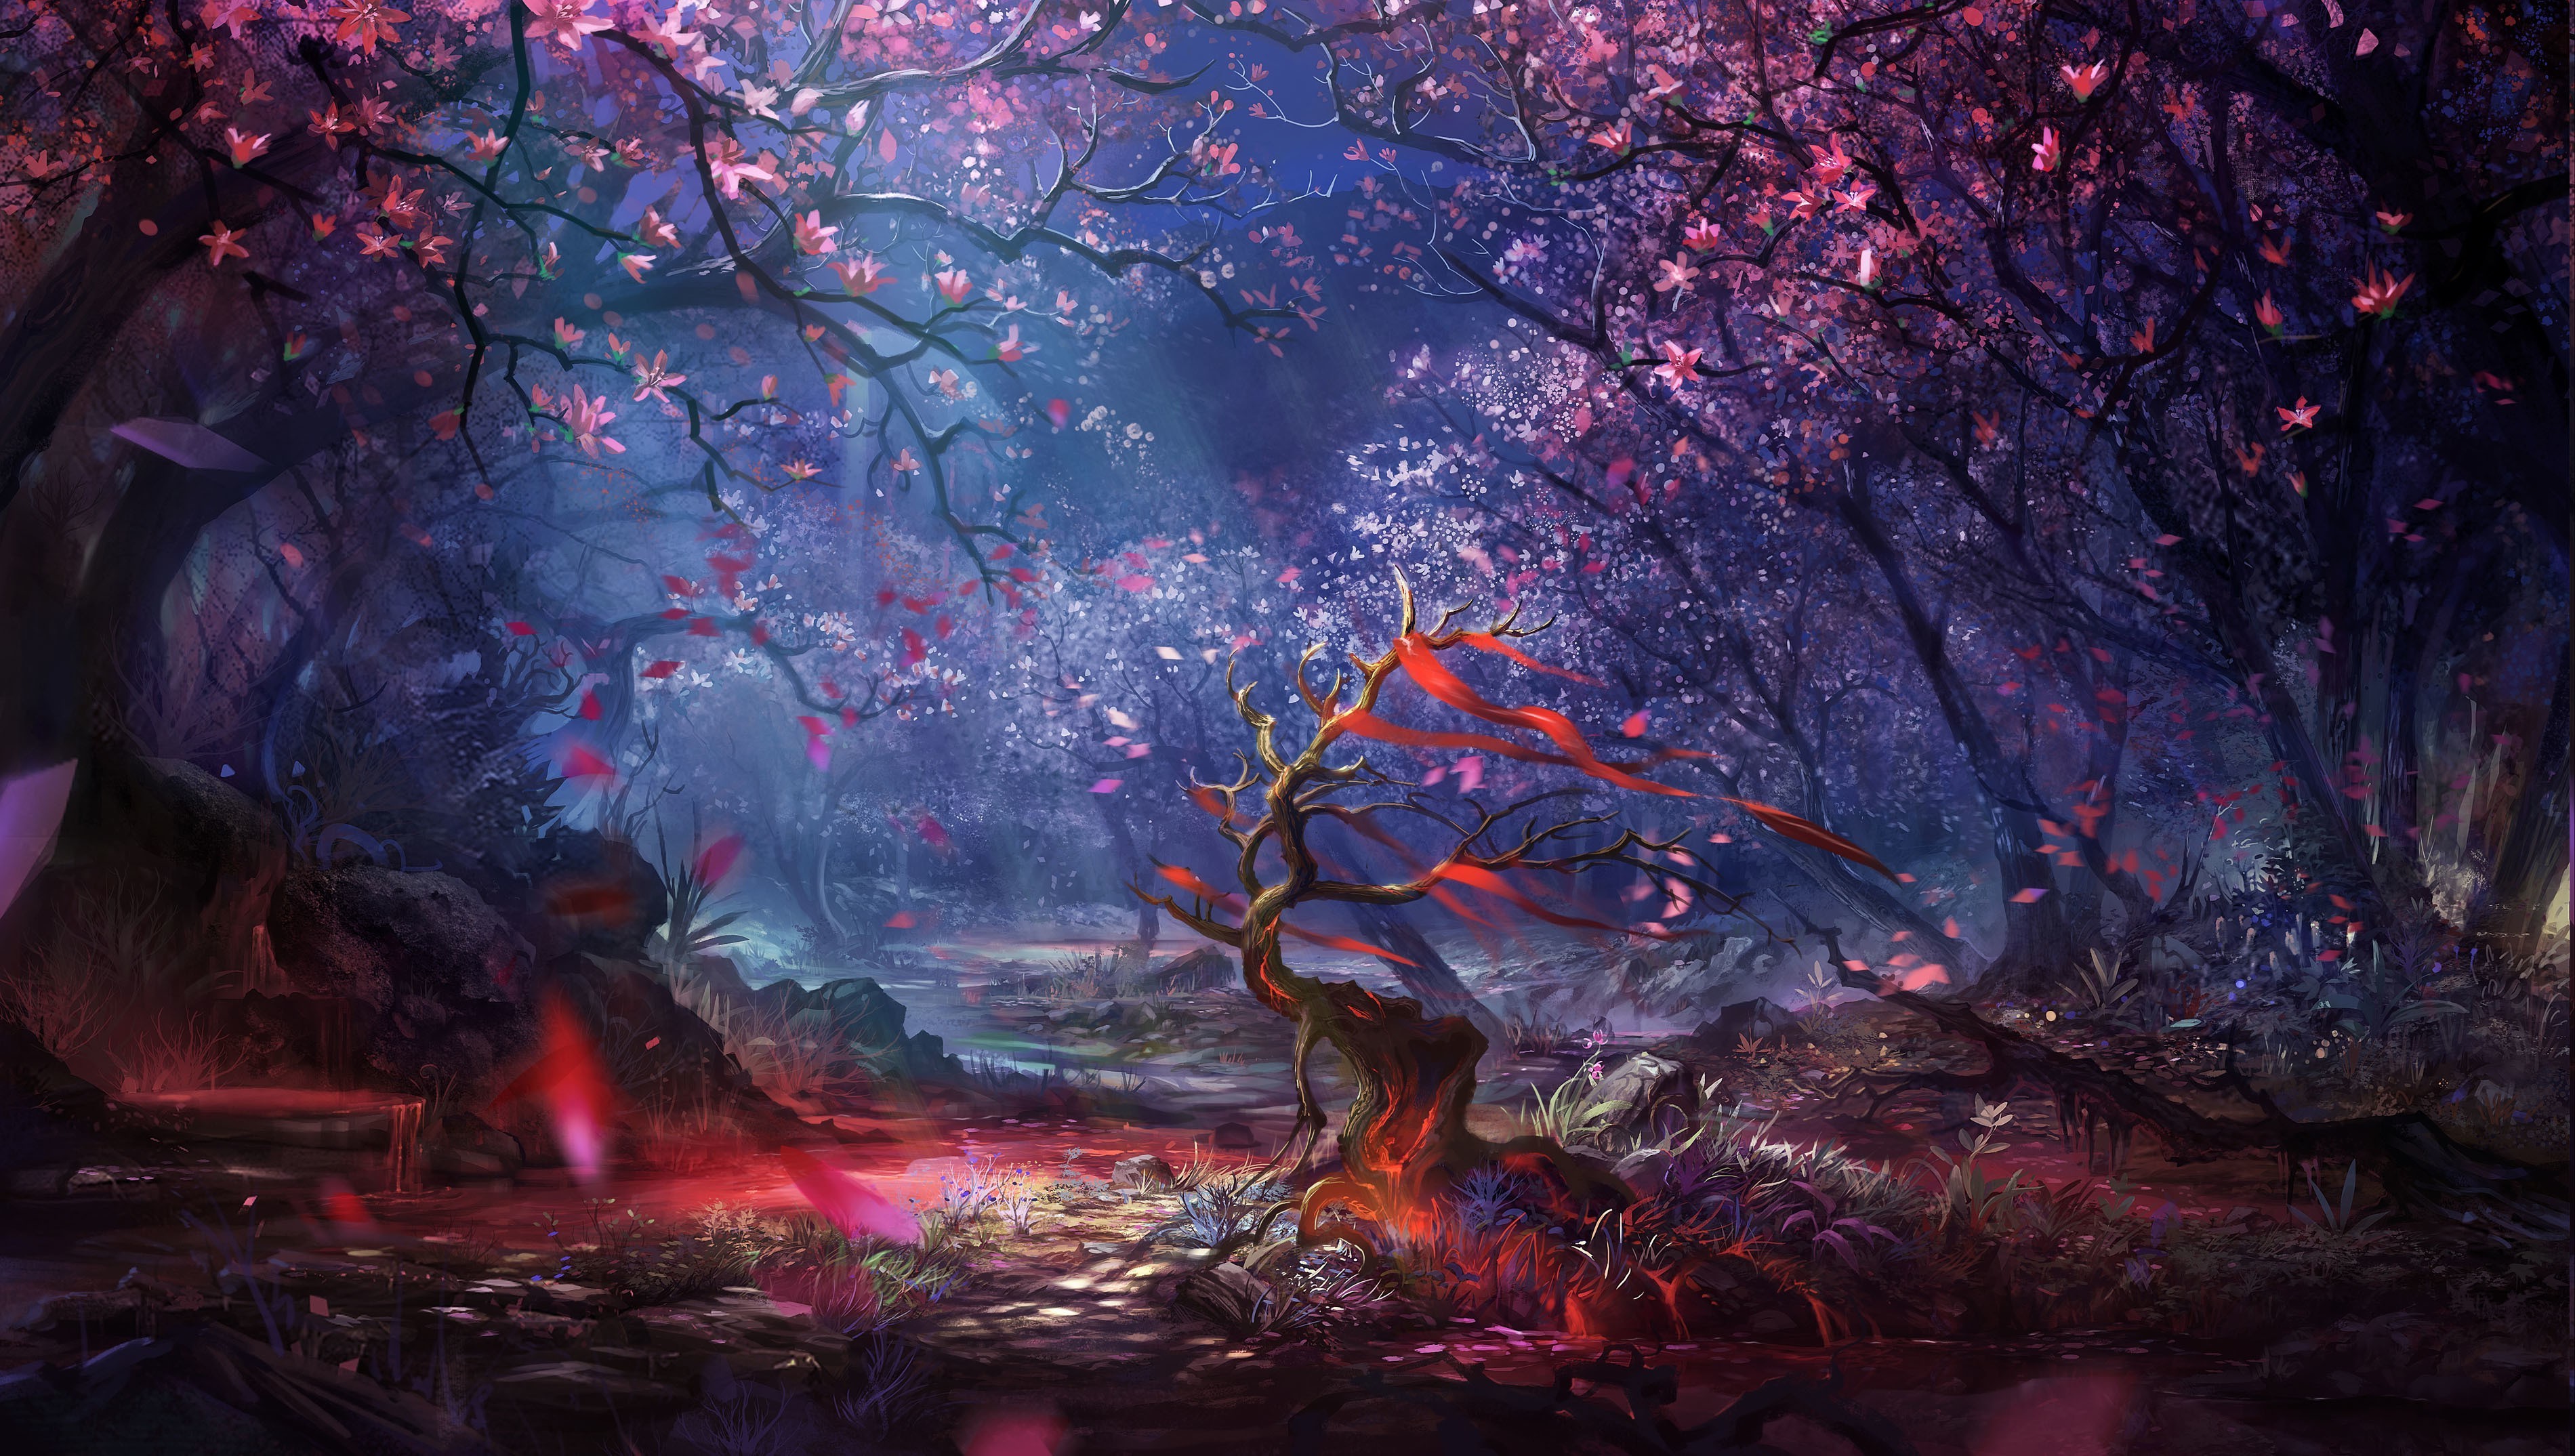 Big Type, Fairy Tale Forest Painting, Aljanh - Digital Art 4k - HD Wallpaper 